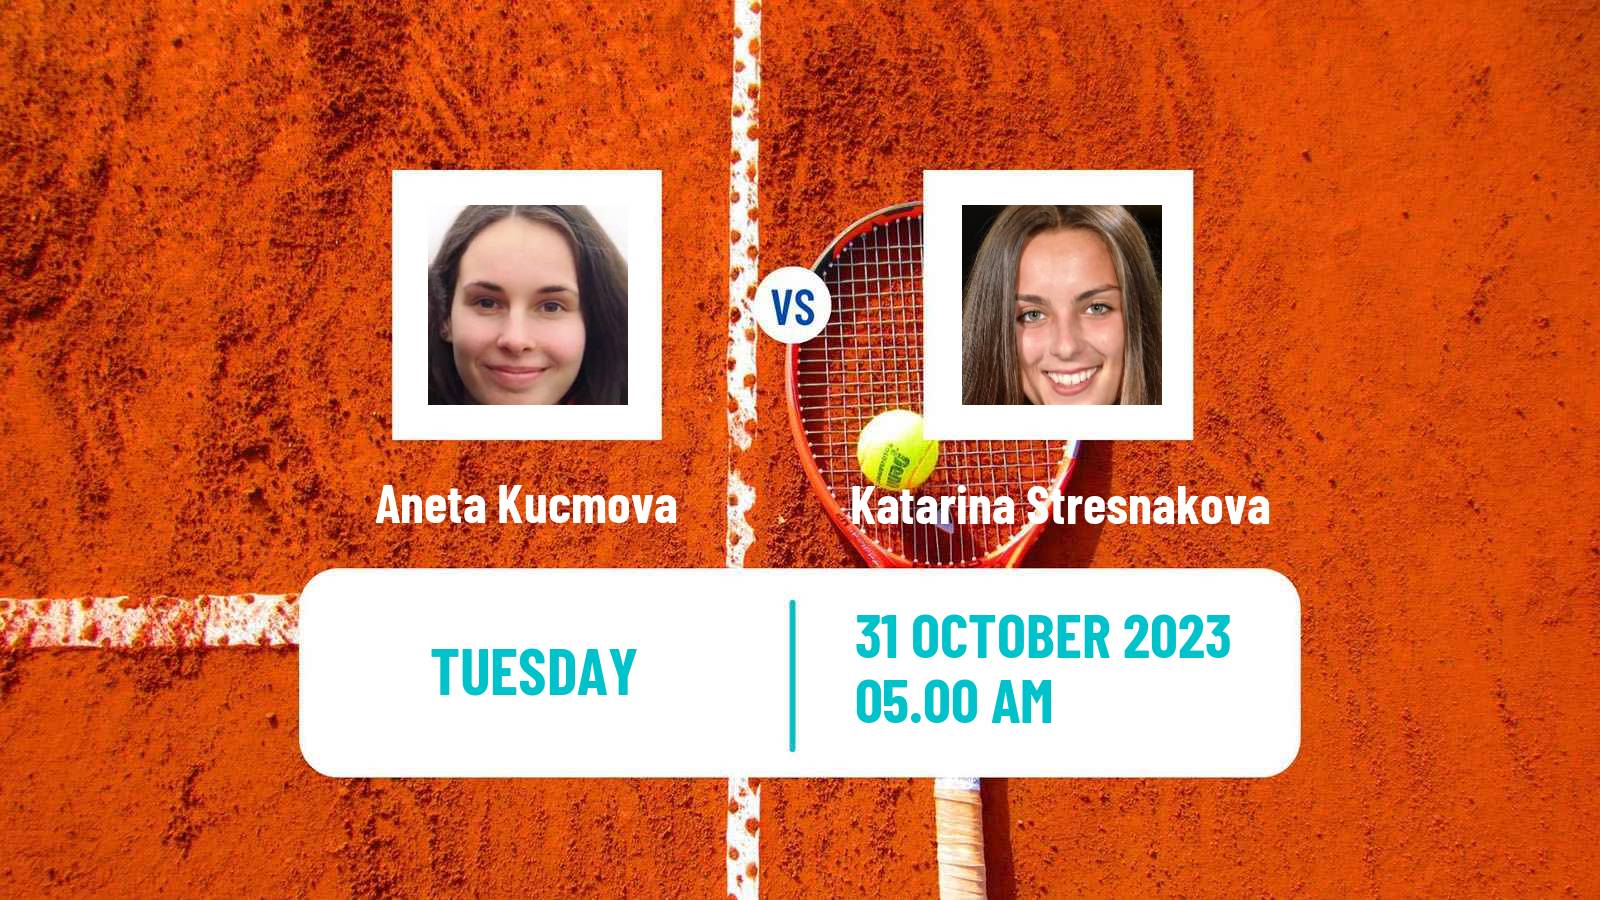 Tennis ITF W60 Bratislava Women Aneta Kucmova - Katarina Stresnakova